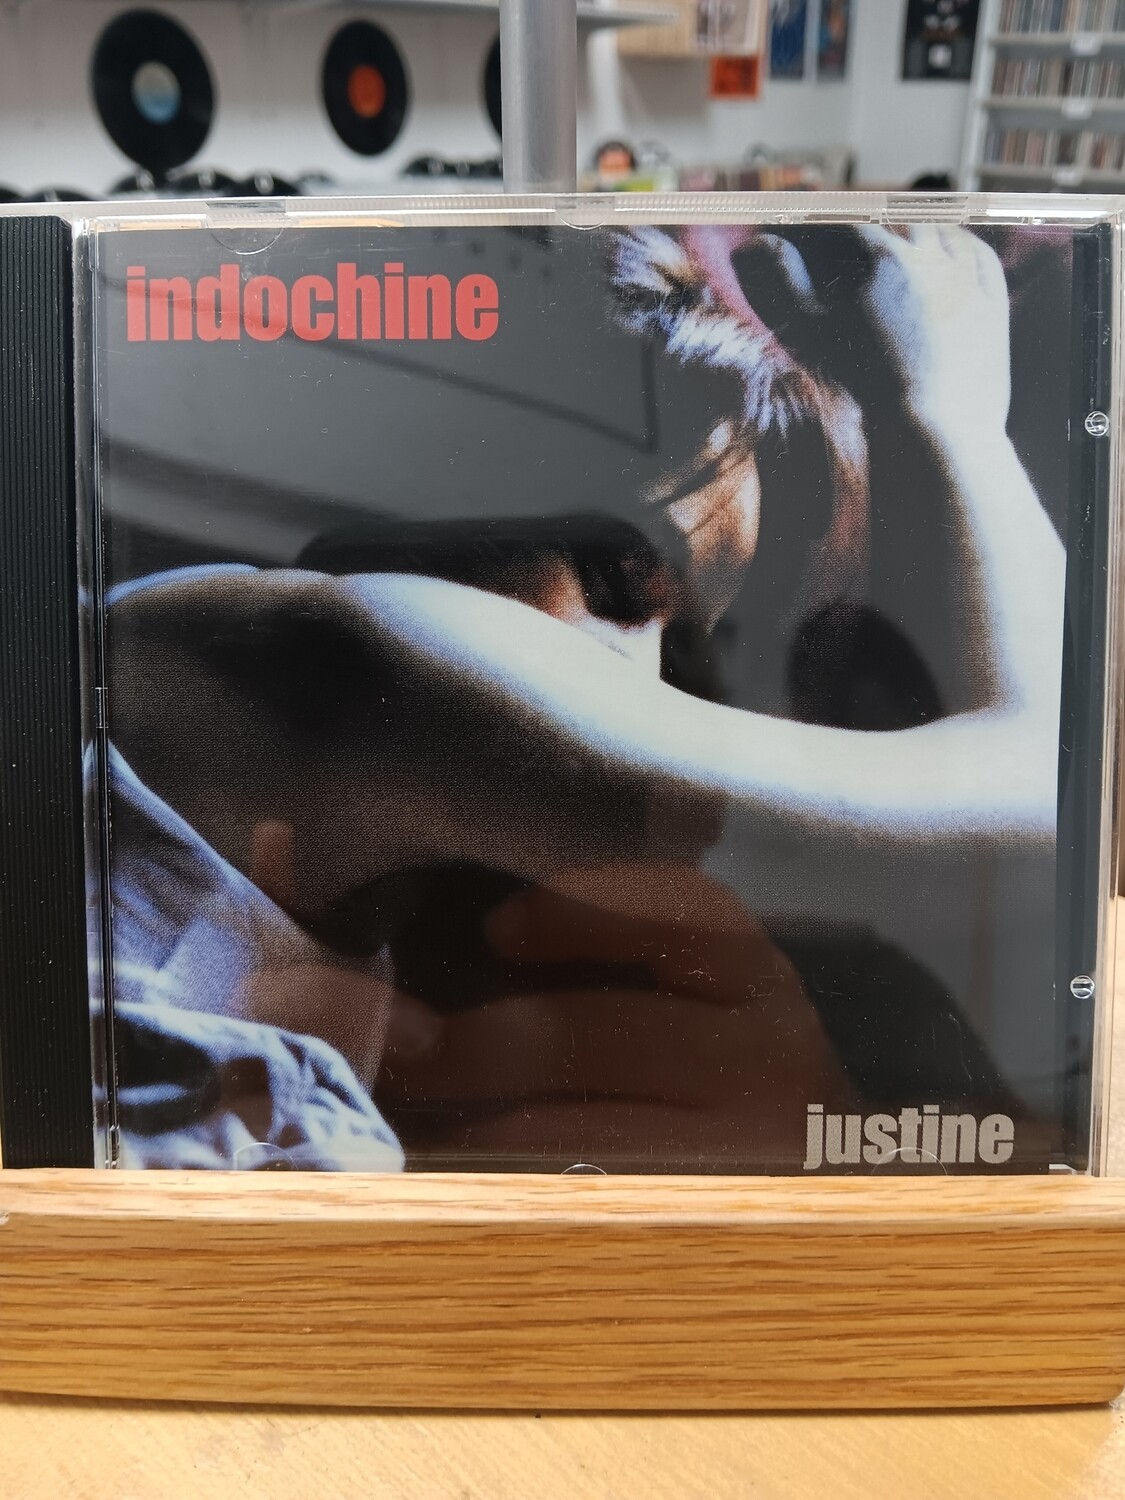 Indochine - Justine (CD SINGLE)